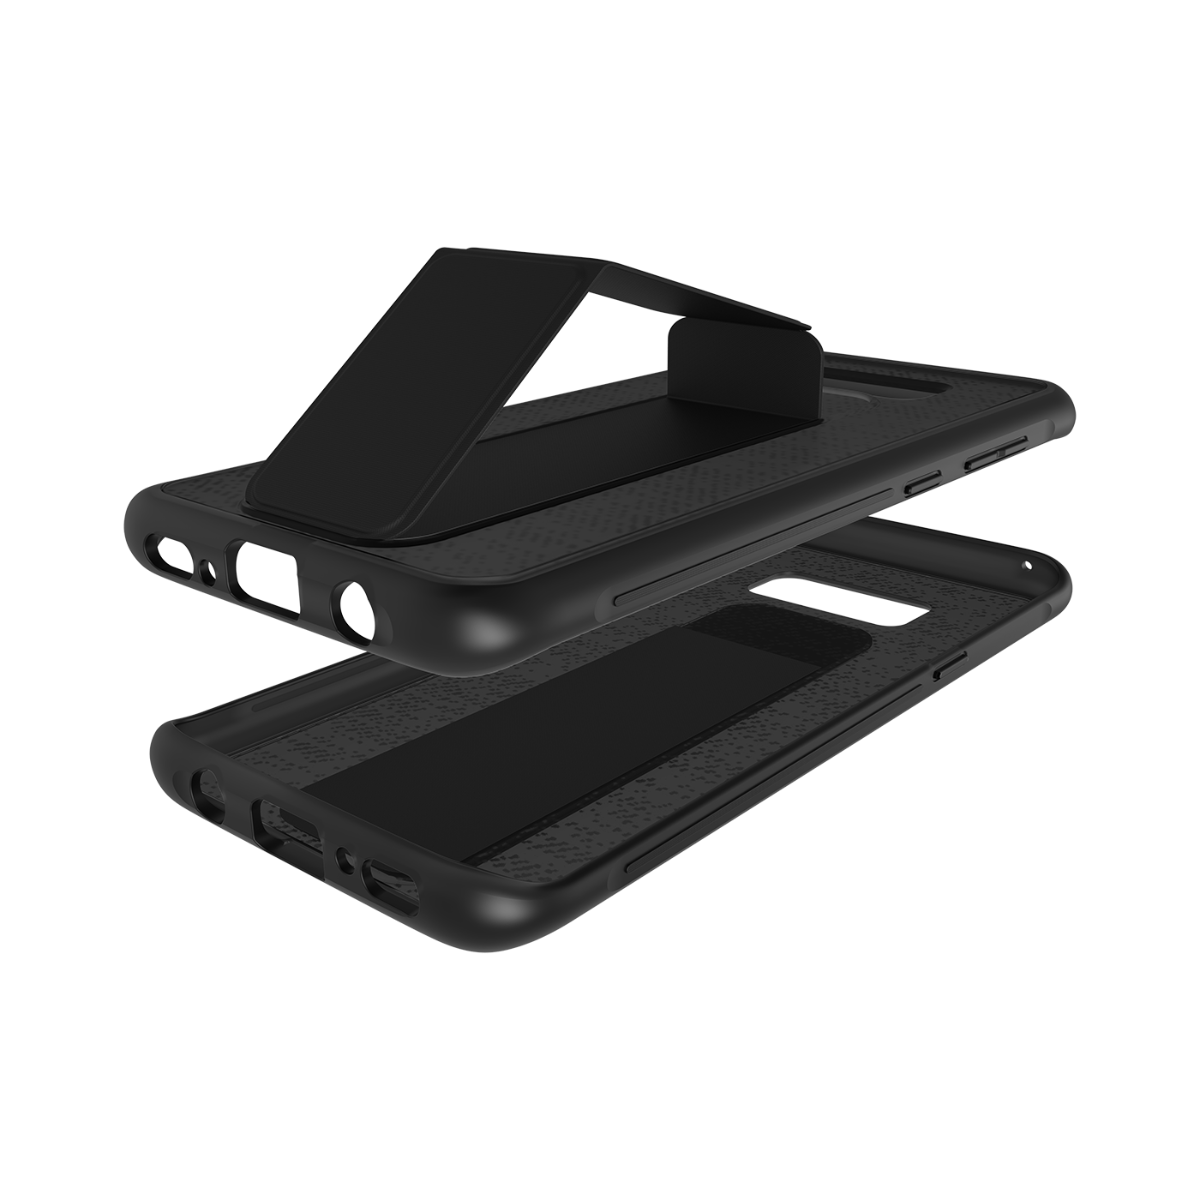 Negar crucero Encantador Shop Black Grip Case Black For Samsung S8 | adidas-cases